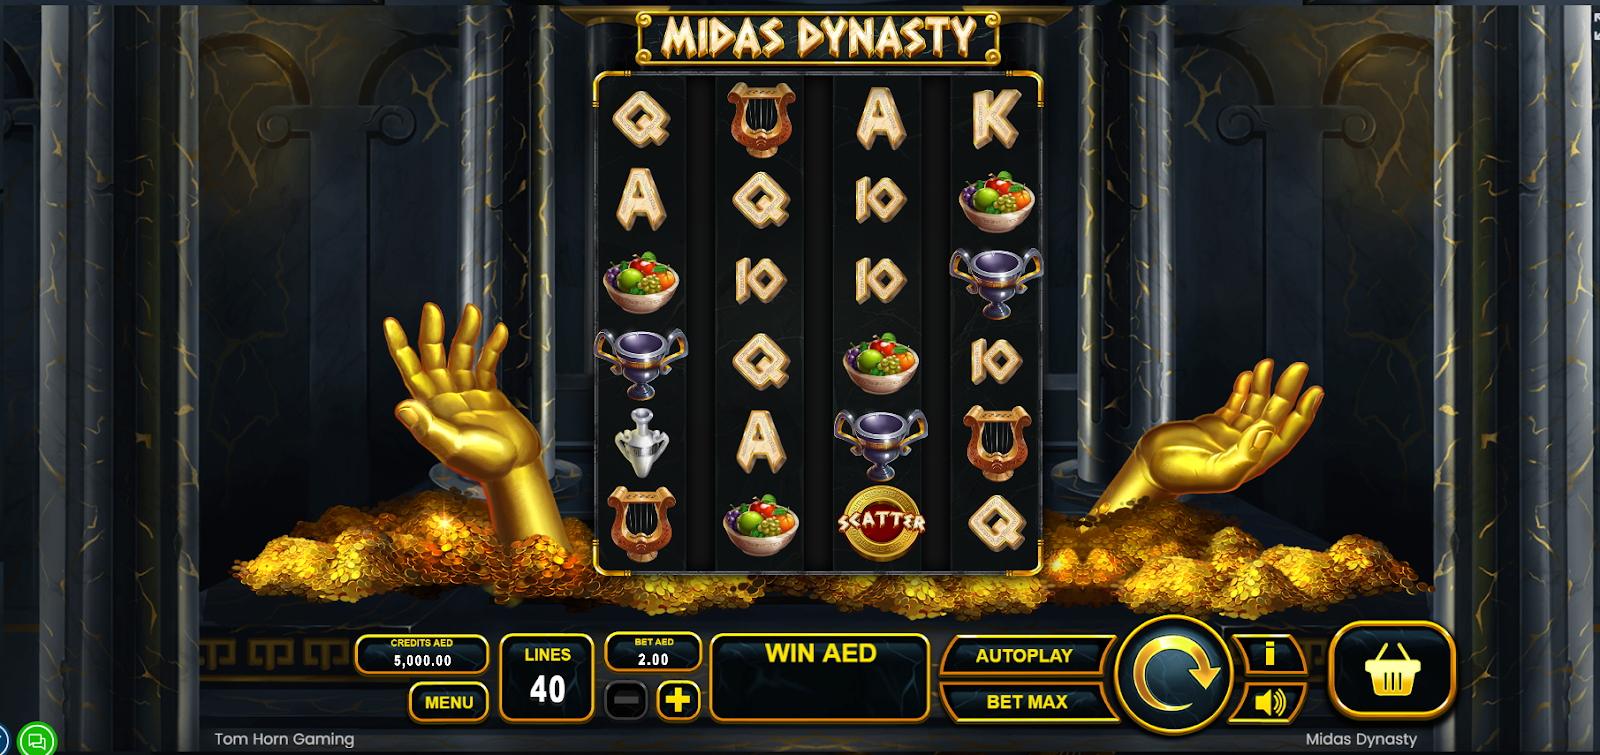 midas dynasty slot screenshot by tom horn